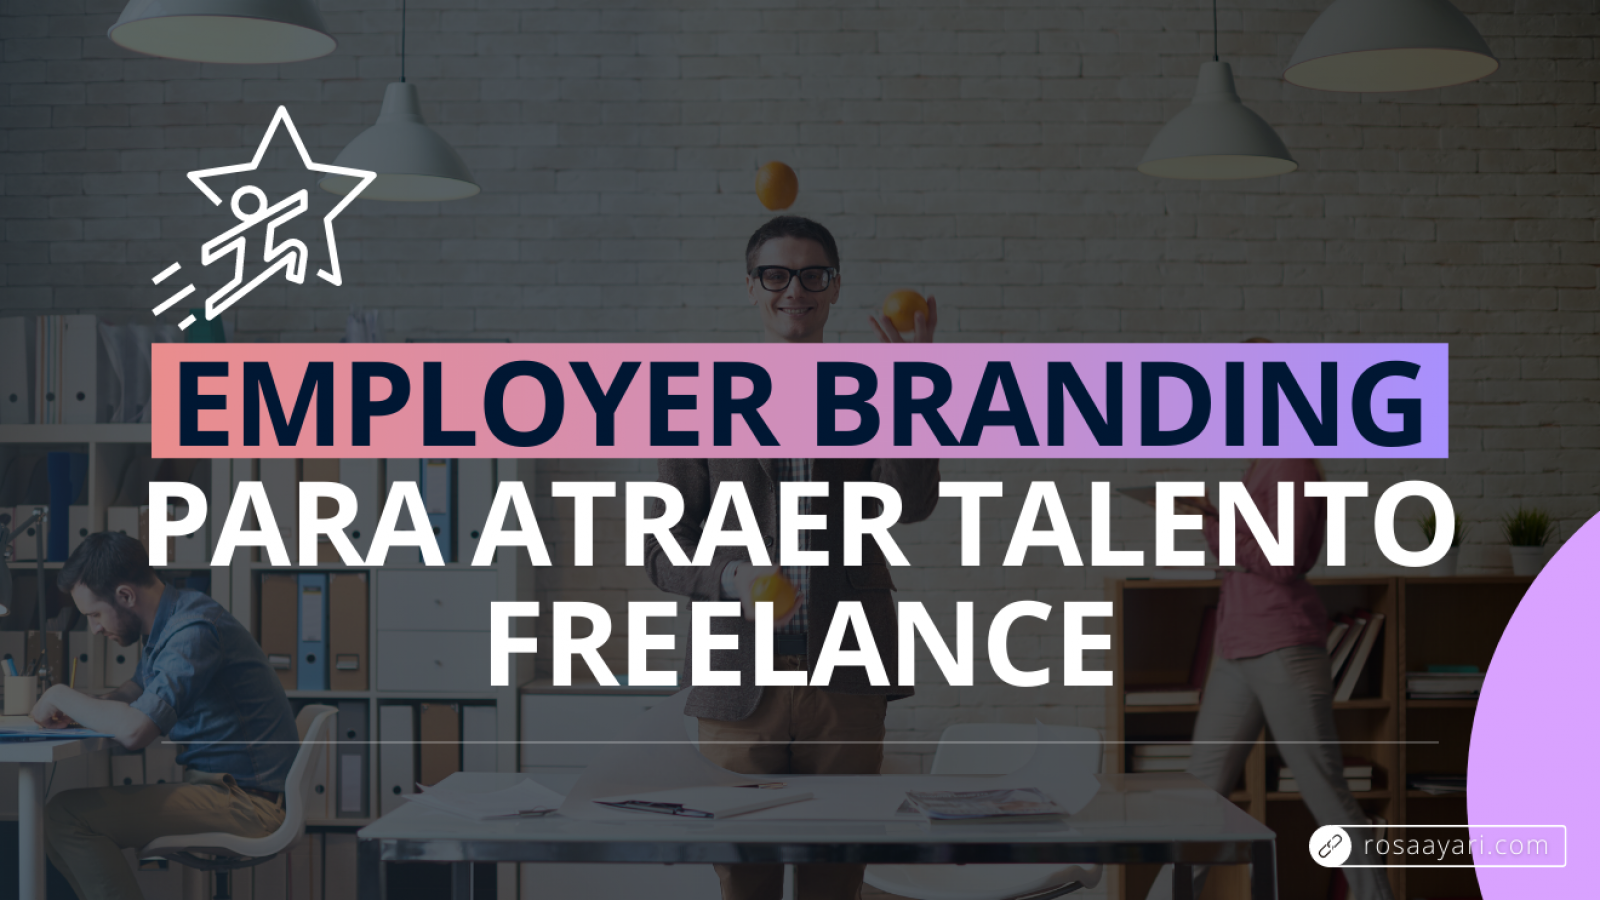 Employer Branding para atraer talento freelance